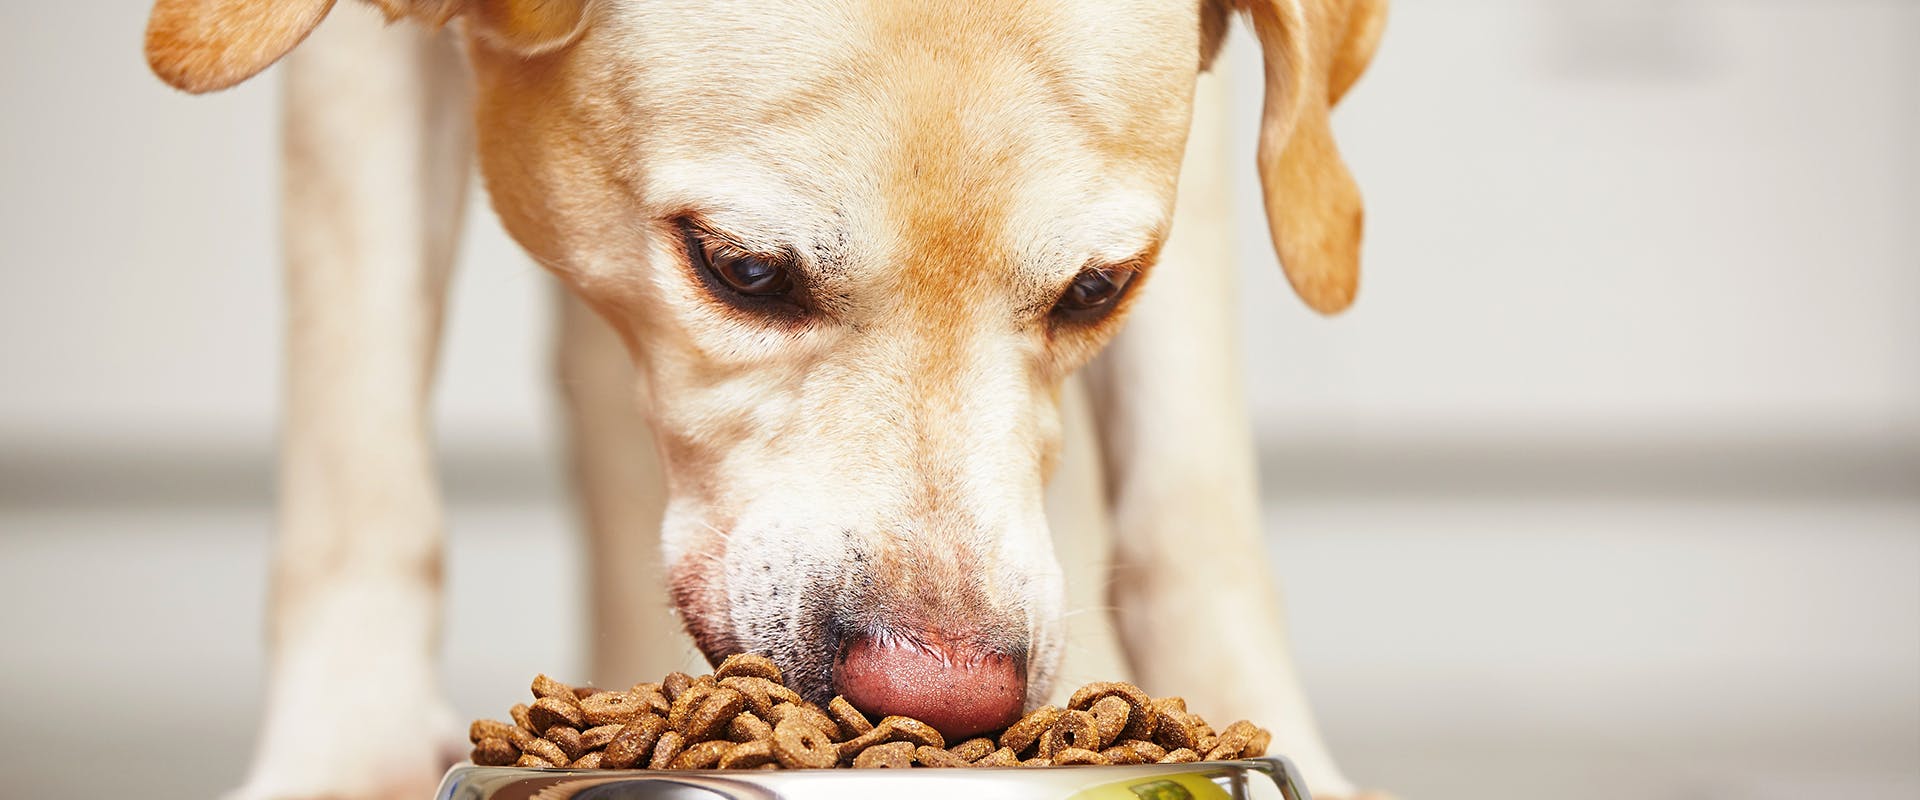 is raw dog food hypoallergenic